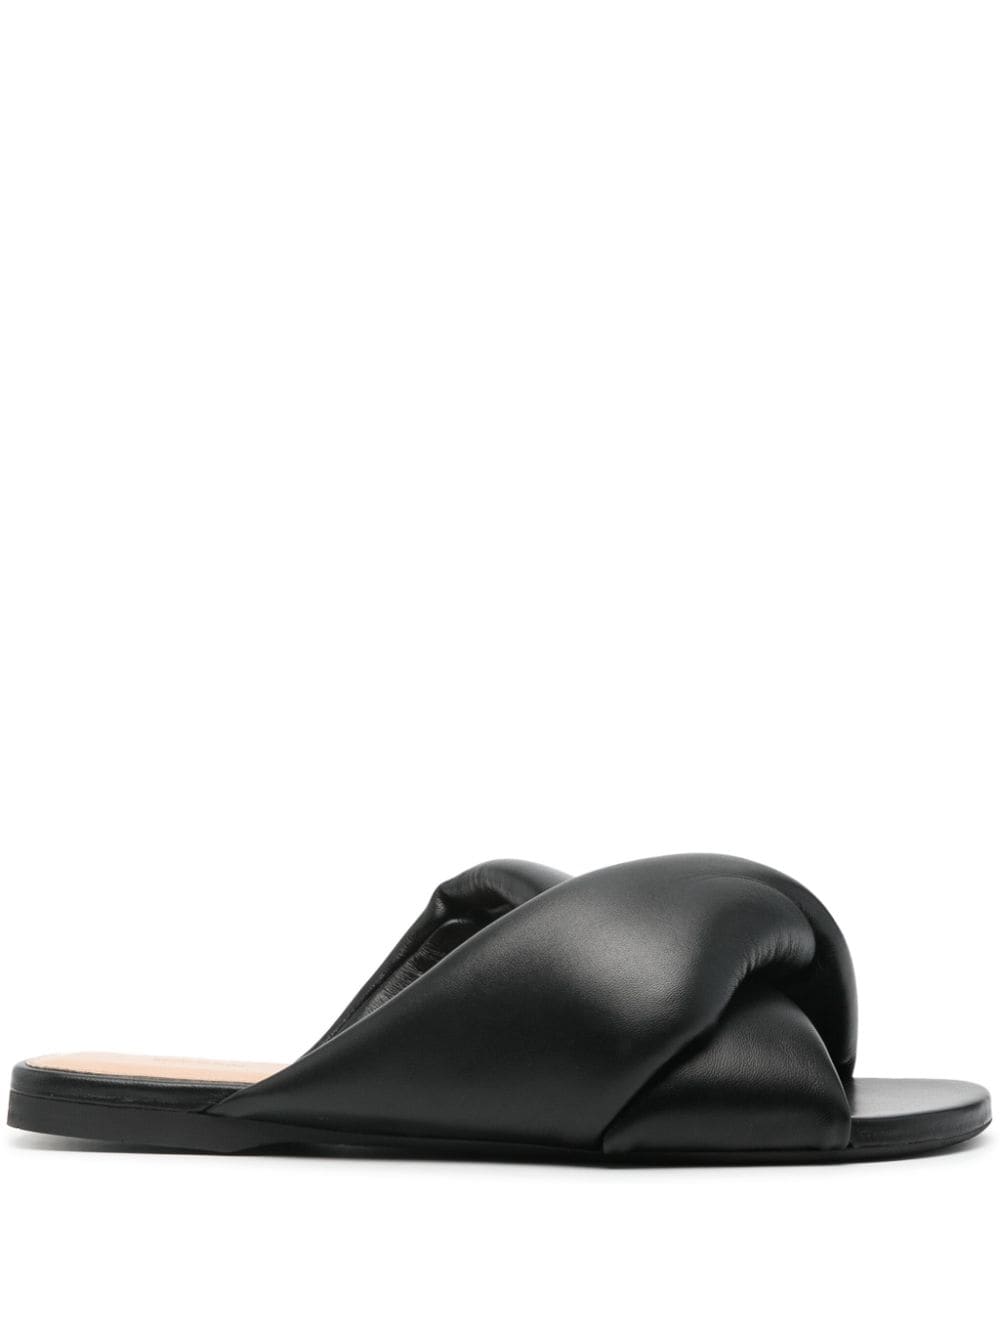 JW Anderson leather flat sandals - Black